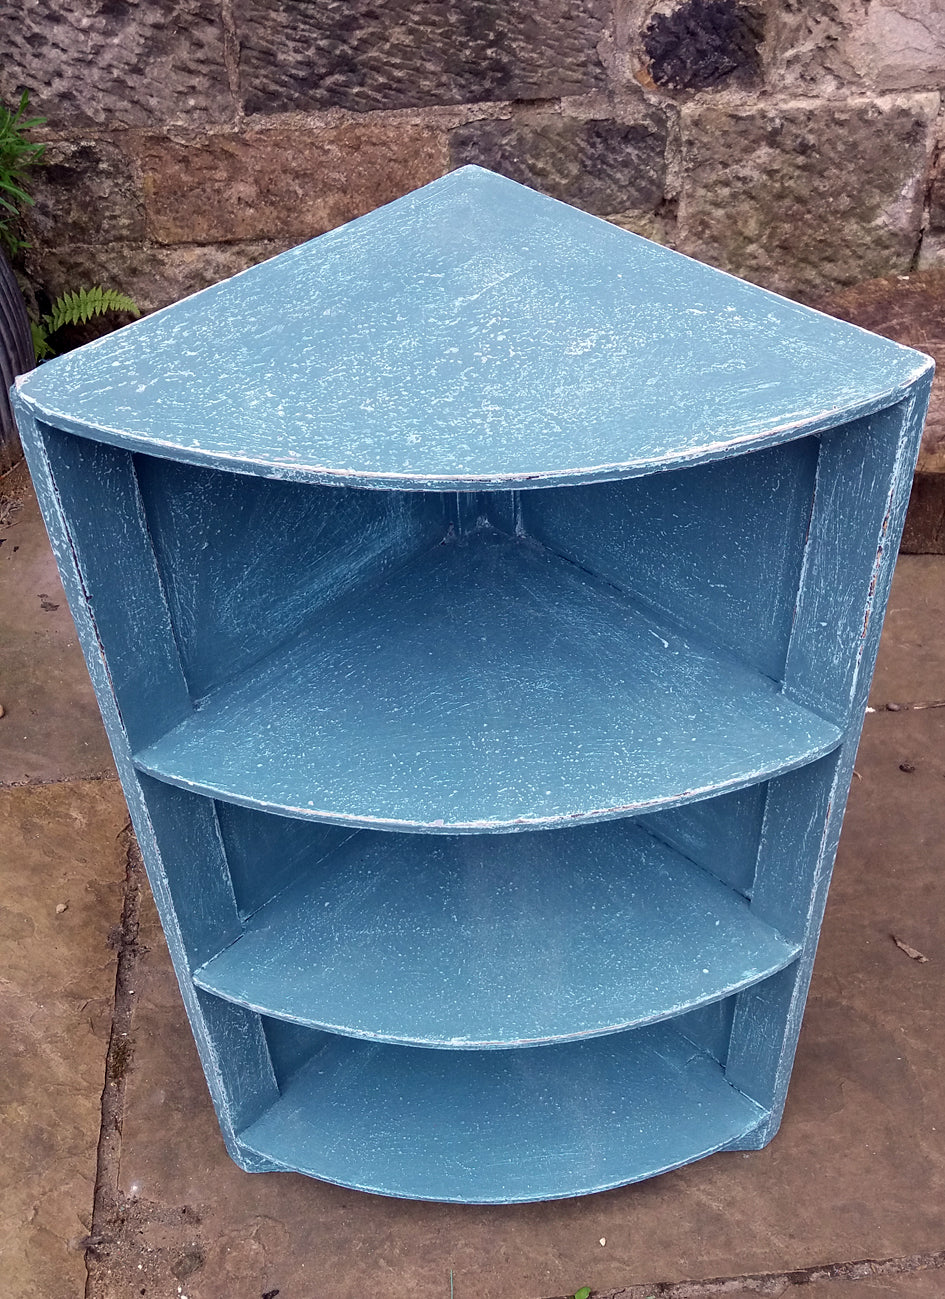 Vintage Corner Shelf Unit in an aged seaworn textured saltwash finish in blue tones